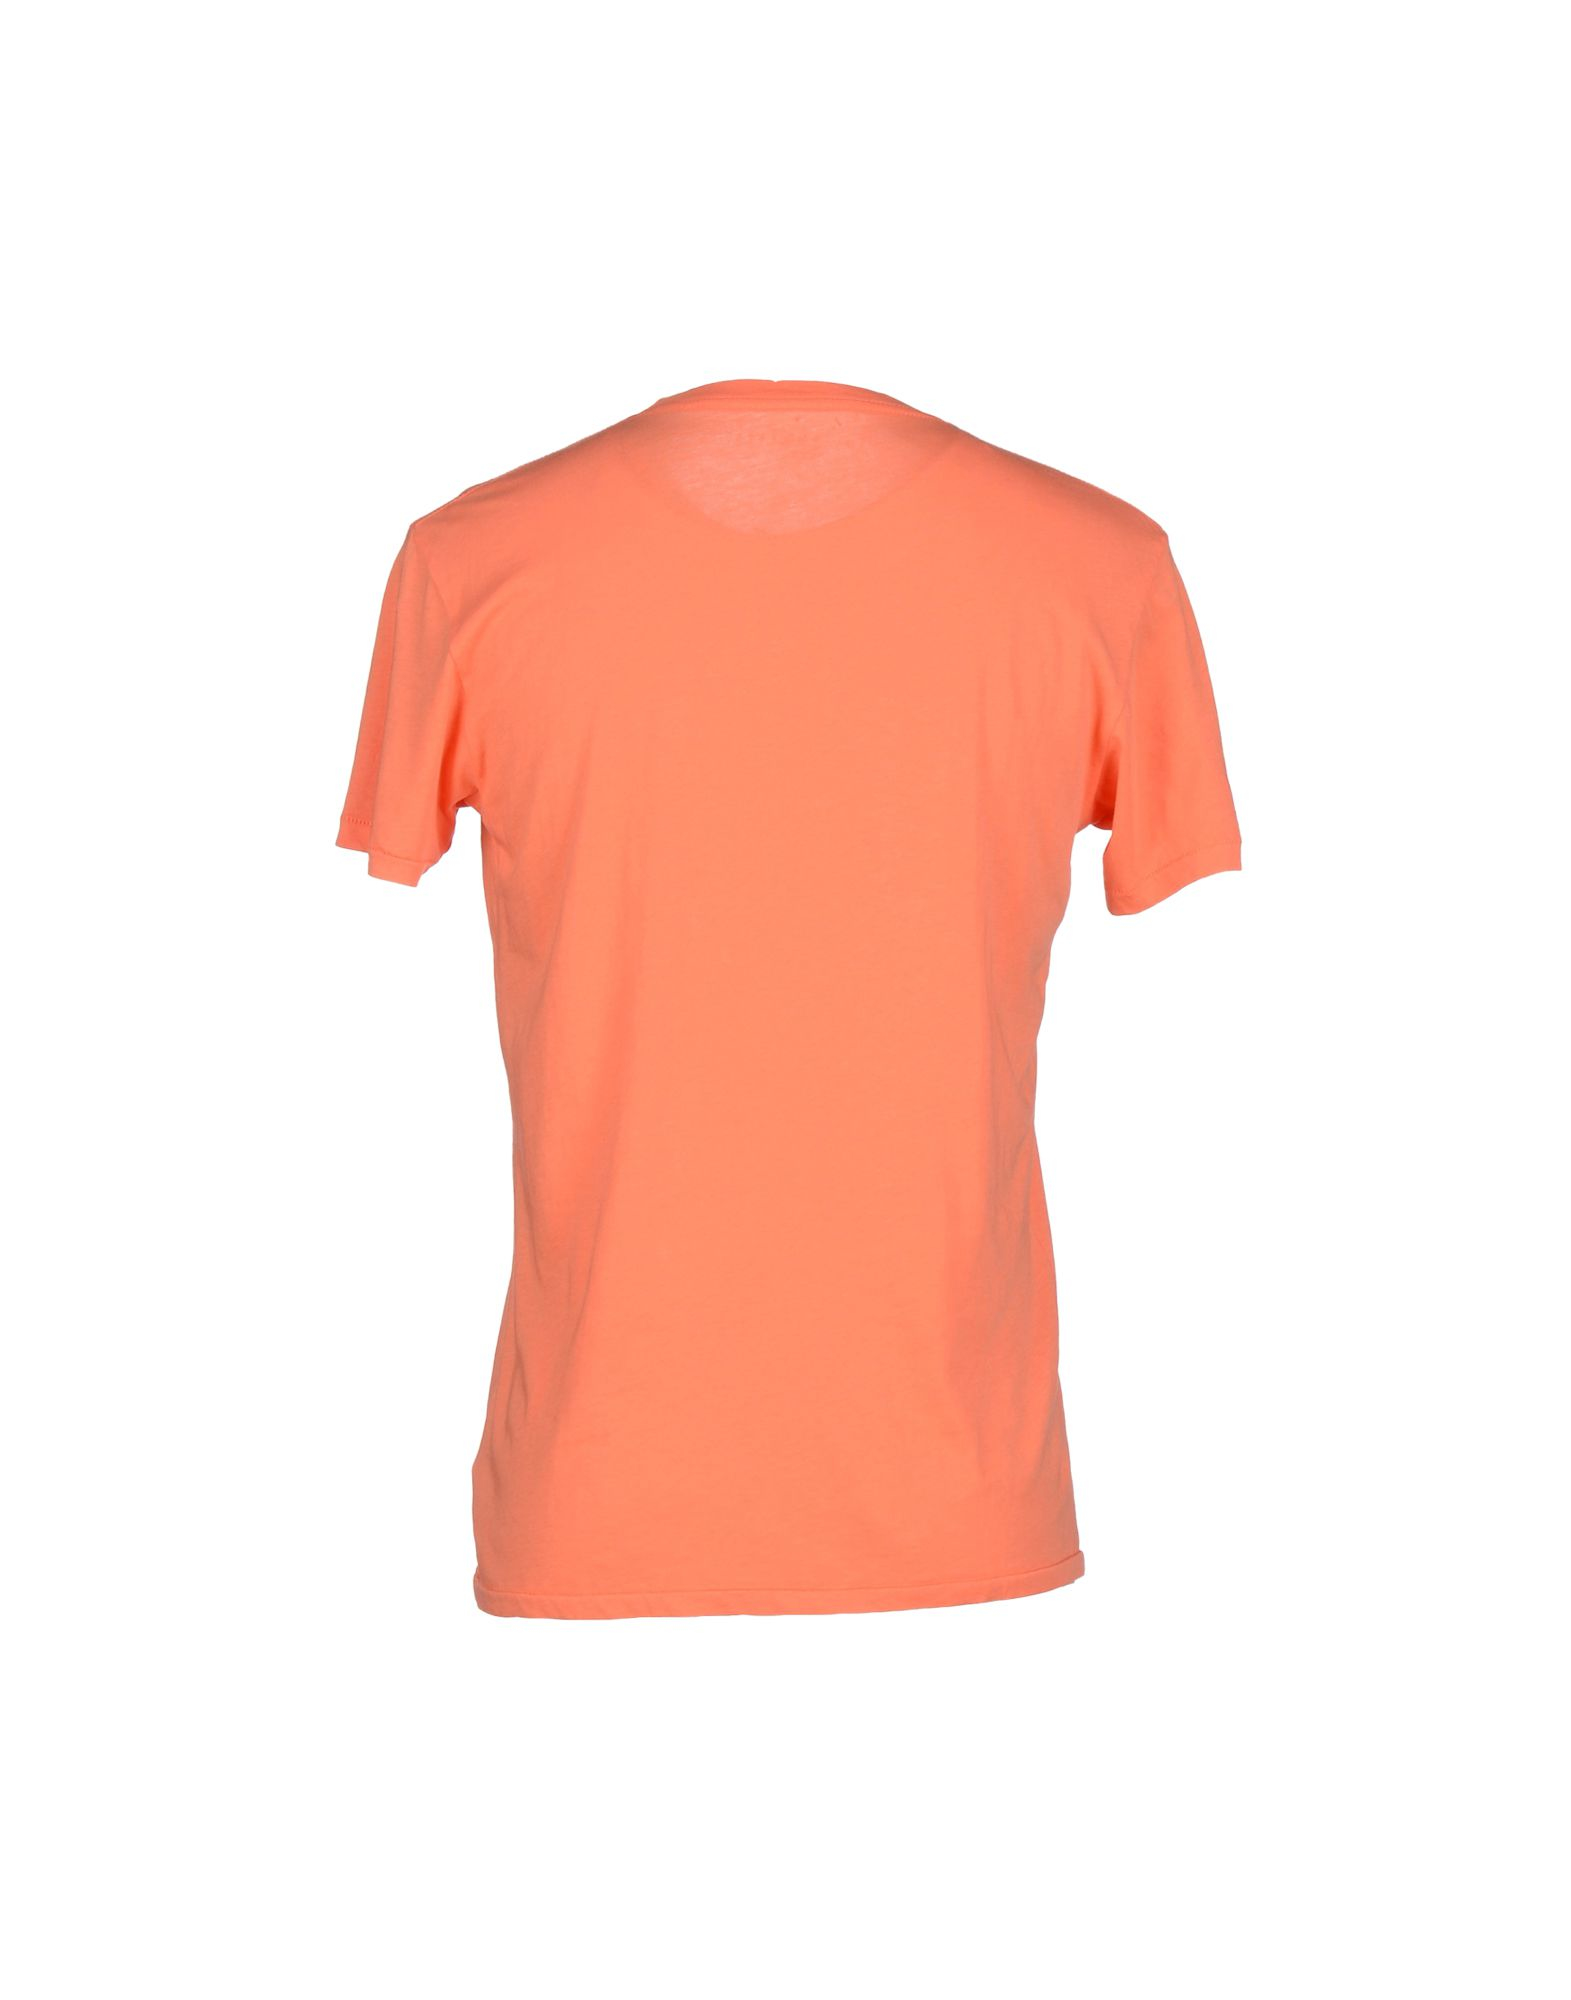 Sol angeles T-shirt in Orange for Men | Lyst